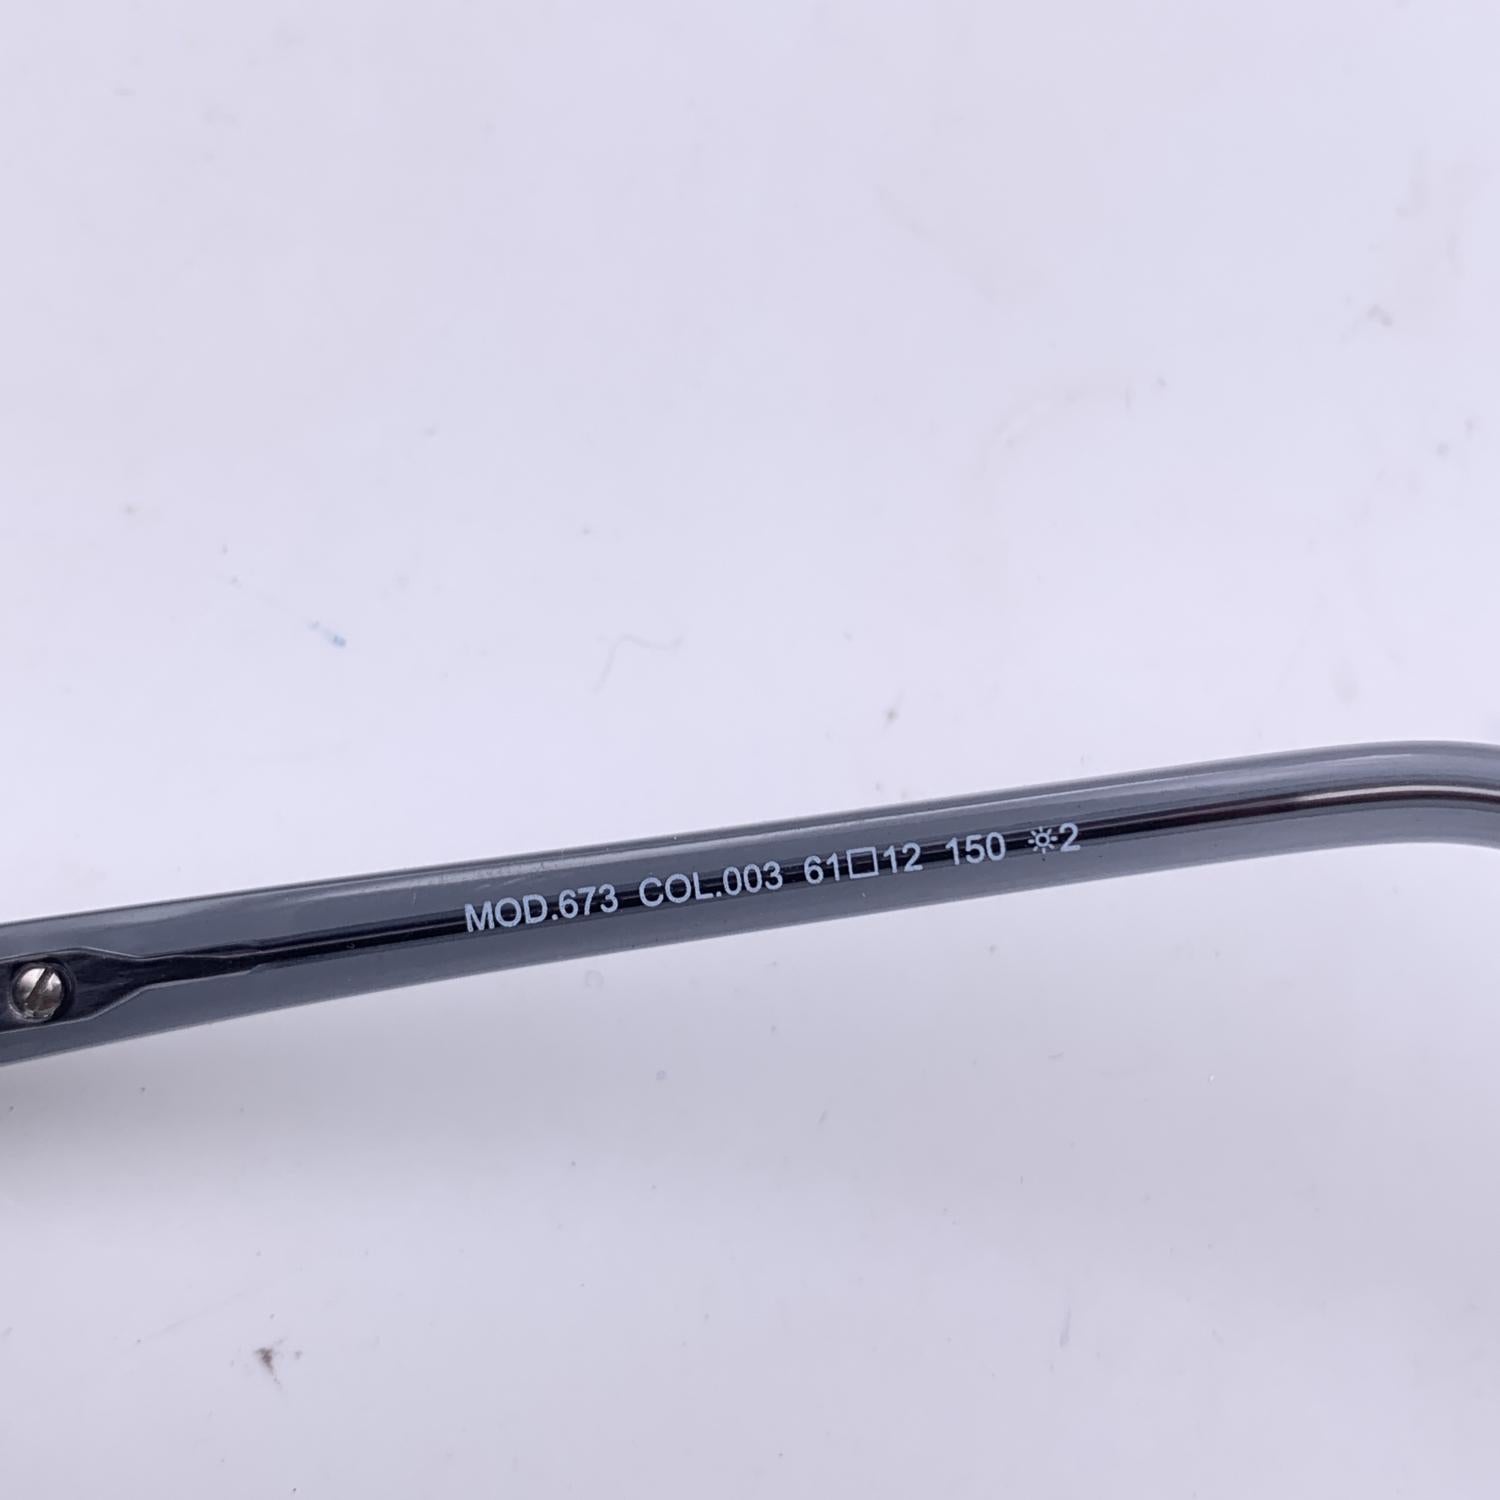 Cazal Grey Gunmetal Acetate Sunglasses Mod. 673 003 61/12 150 mm For Sale 1